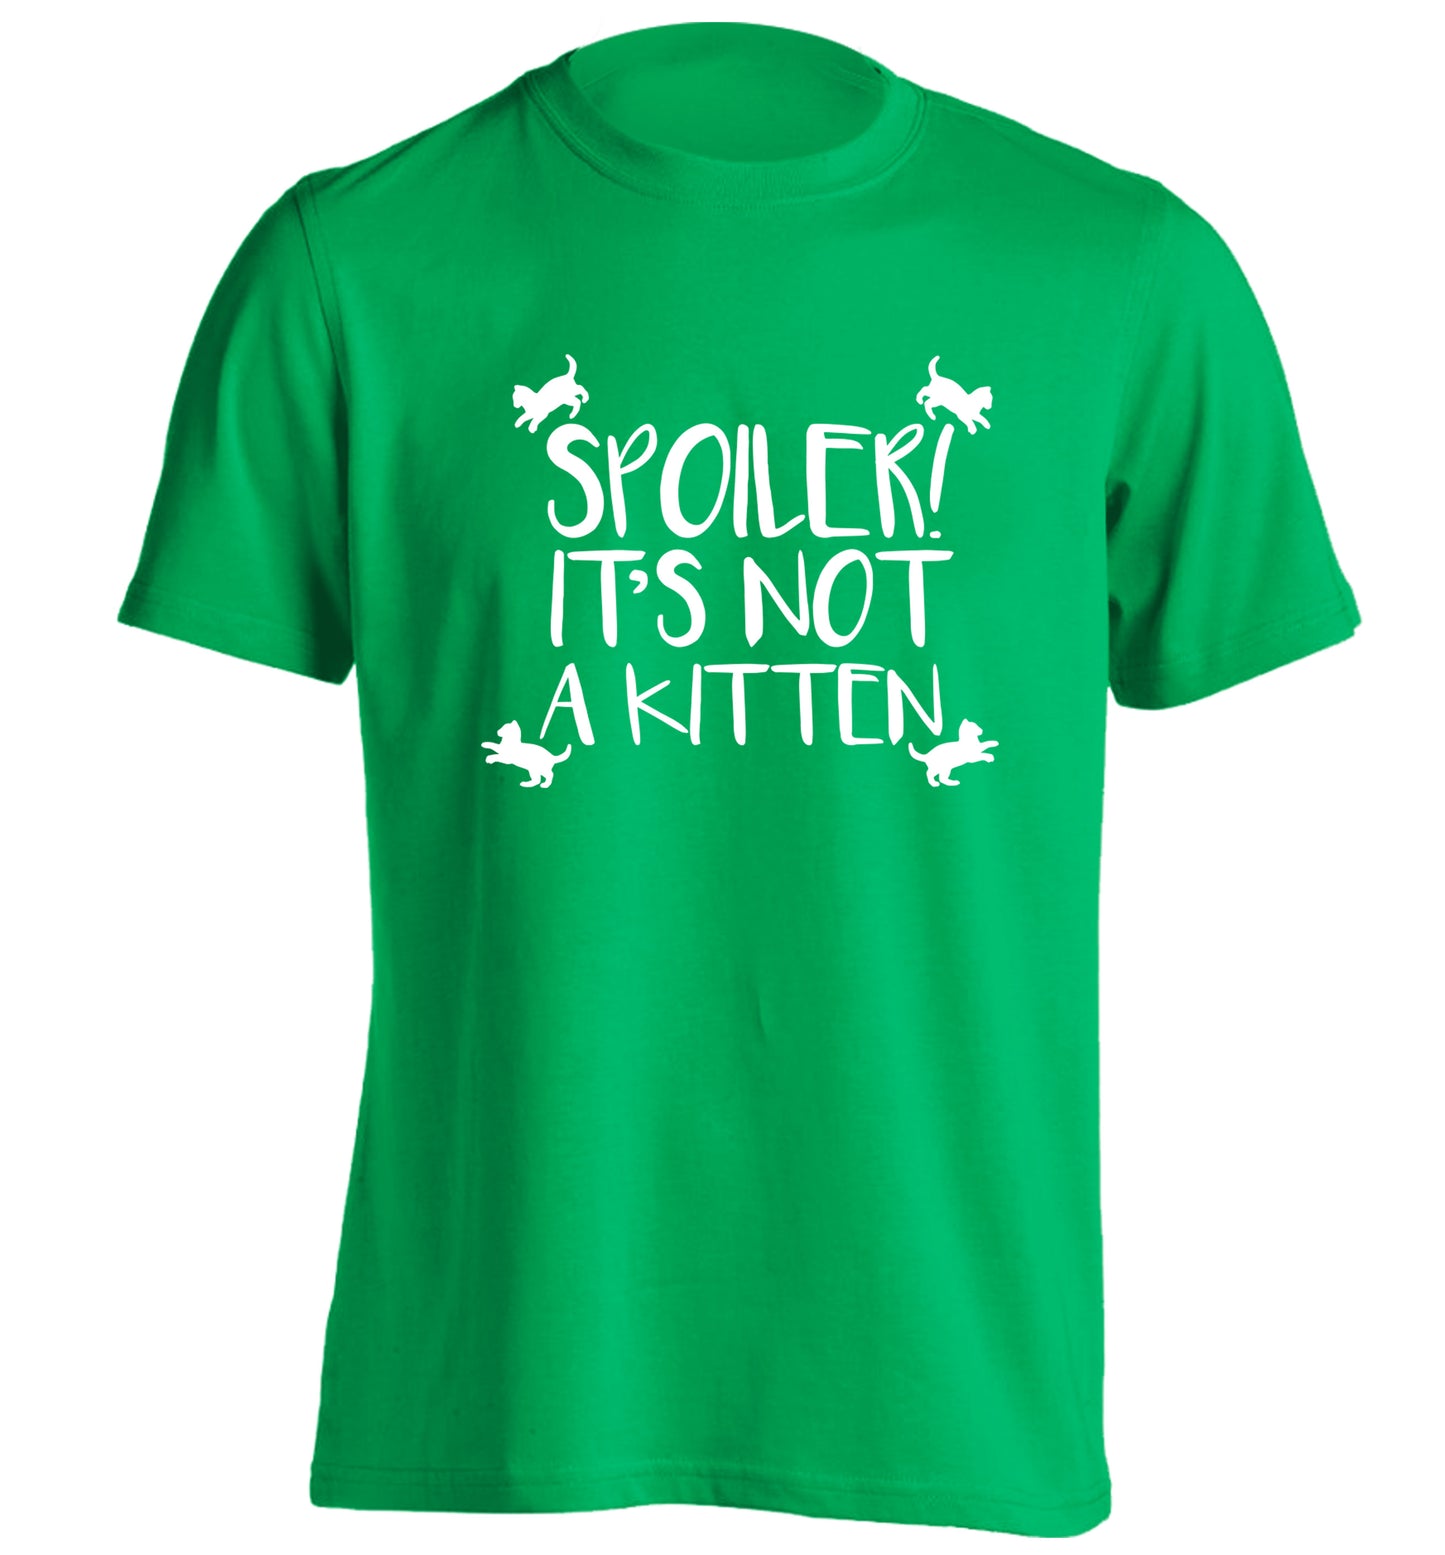 Spoiler it's not a kitten adults unisex green Tshirt 2XL